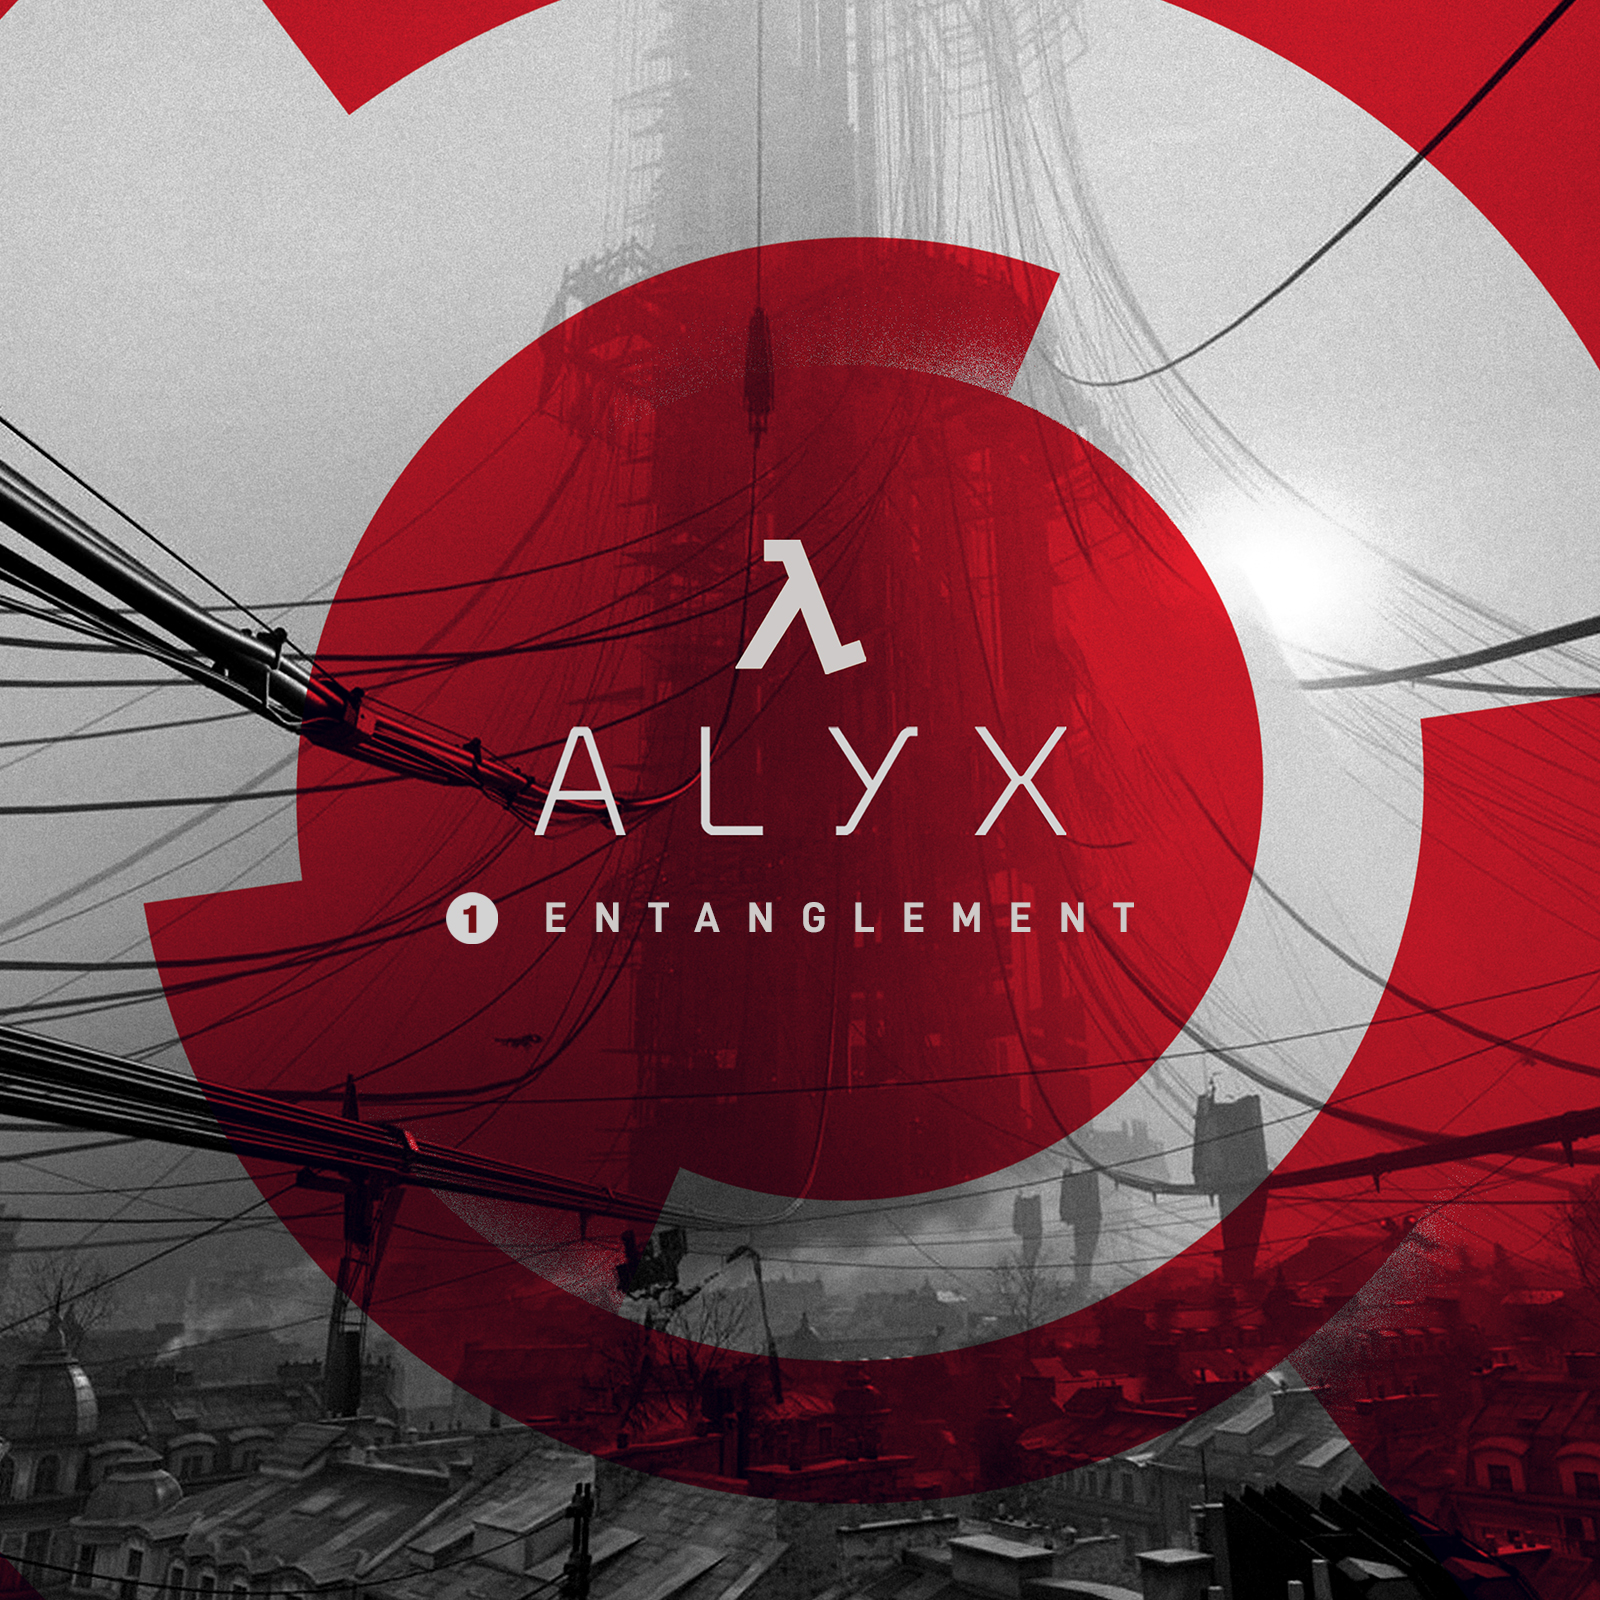 Half-Life: Alyx Soundtrack, Half-Life Wiki